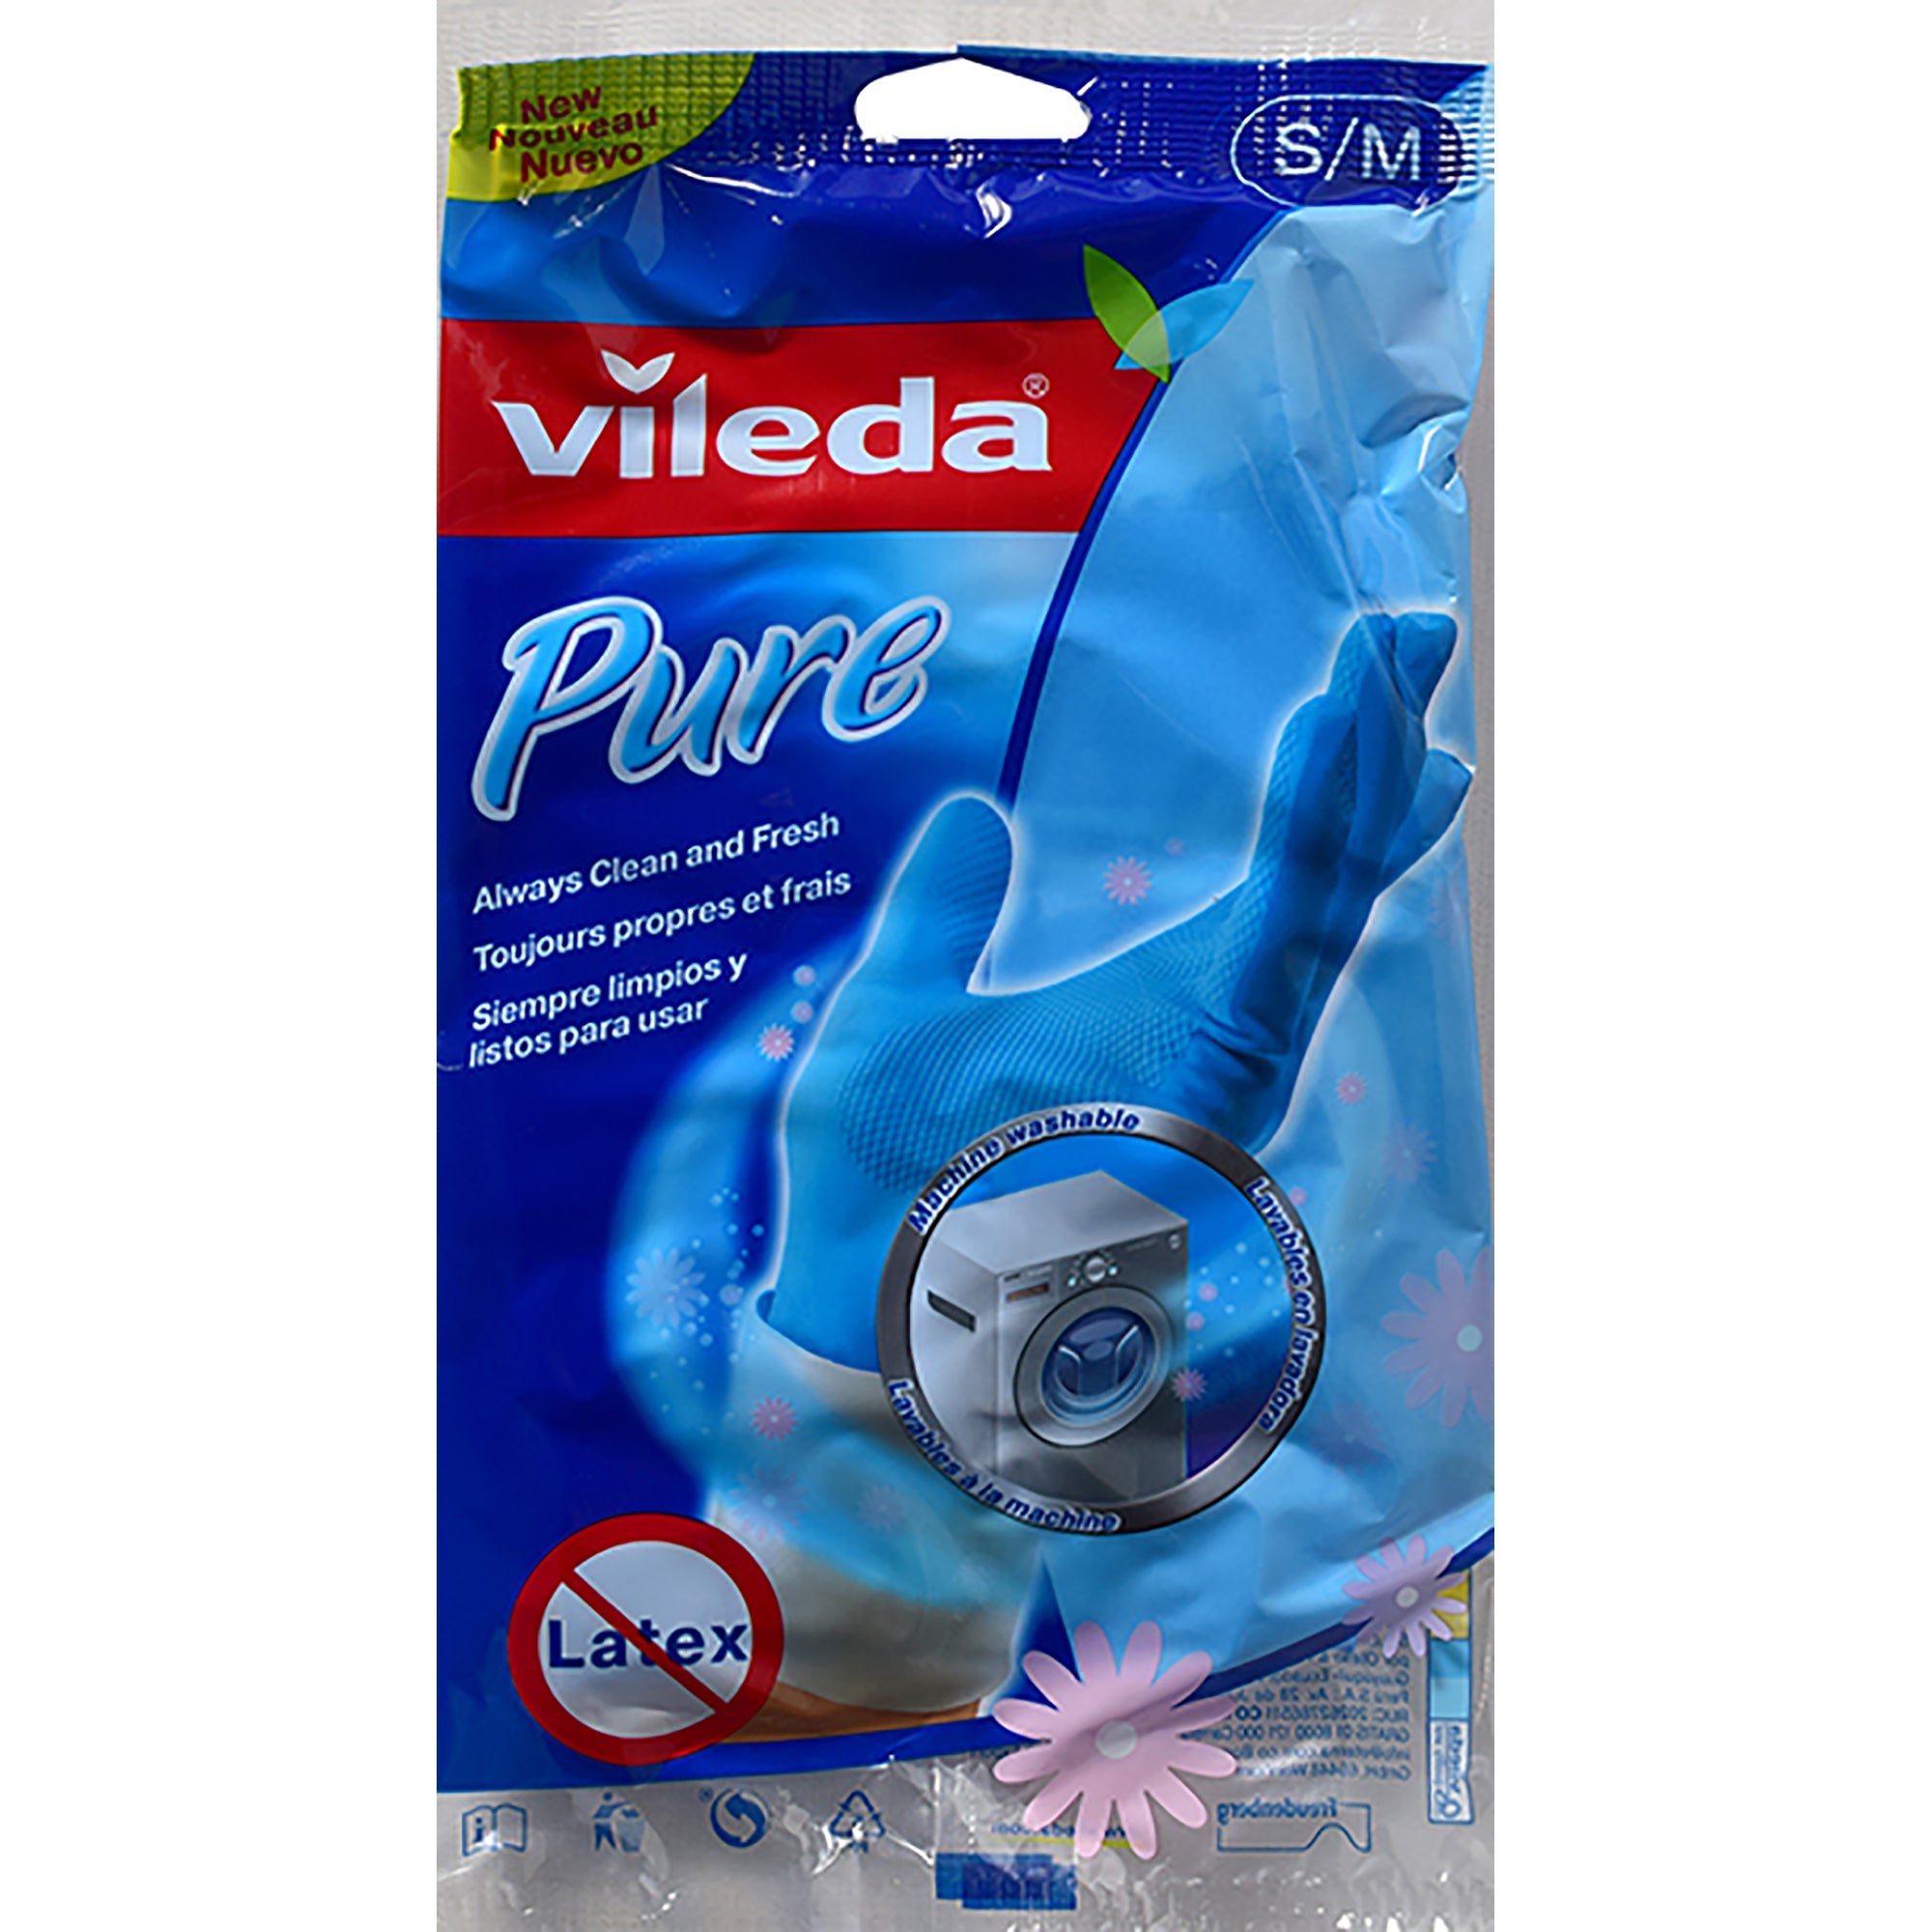 Vileda 1 Pair of Gloves - Pure - Latex Free Small/Medium